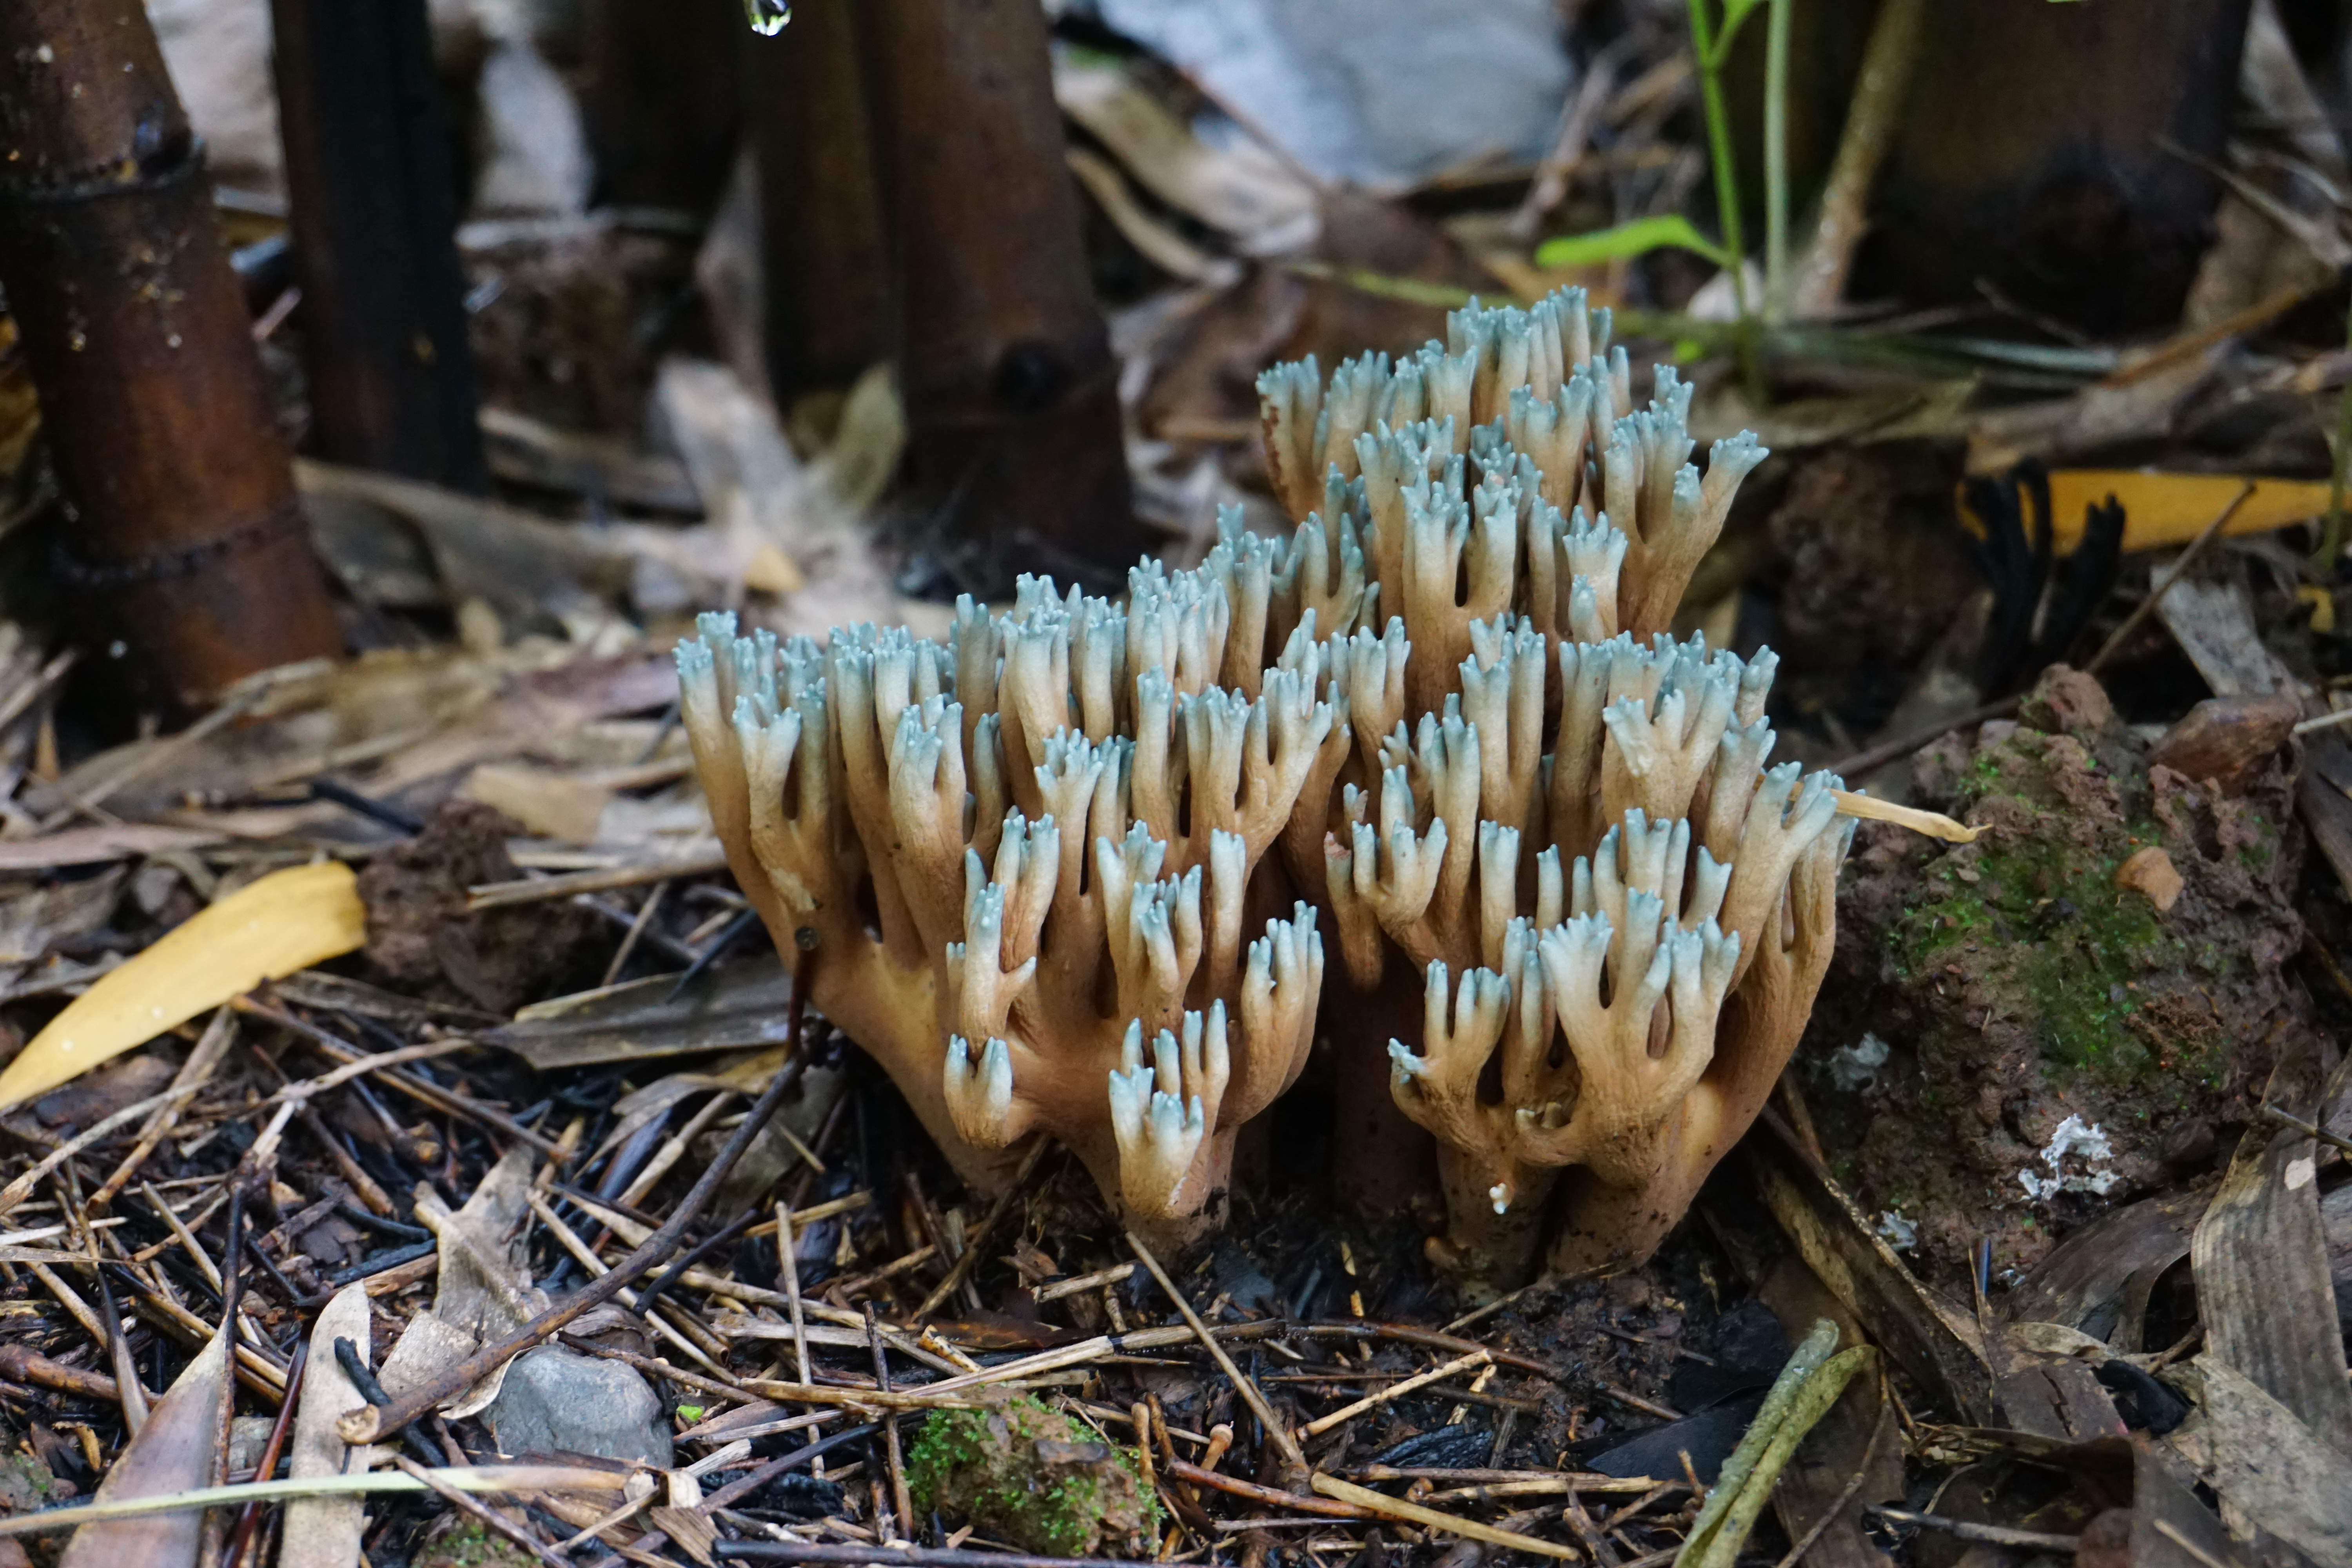 New species of fungus found in Udaipur, Rajasthan